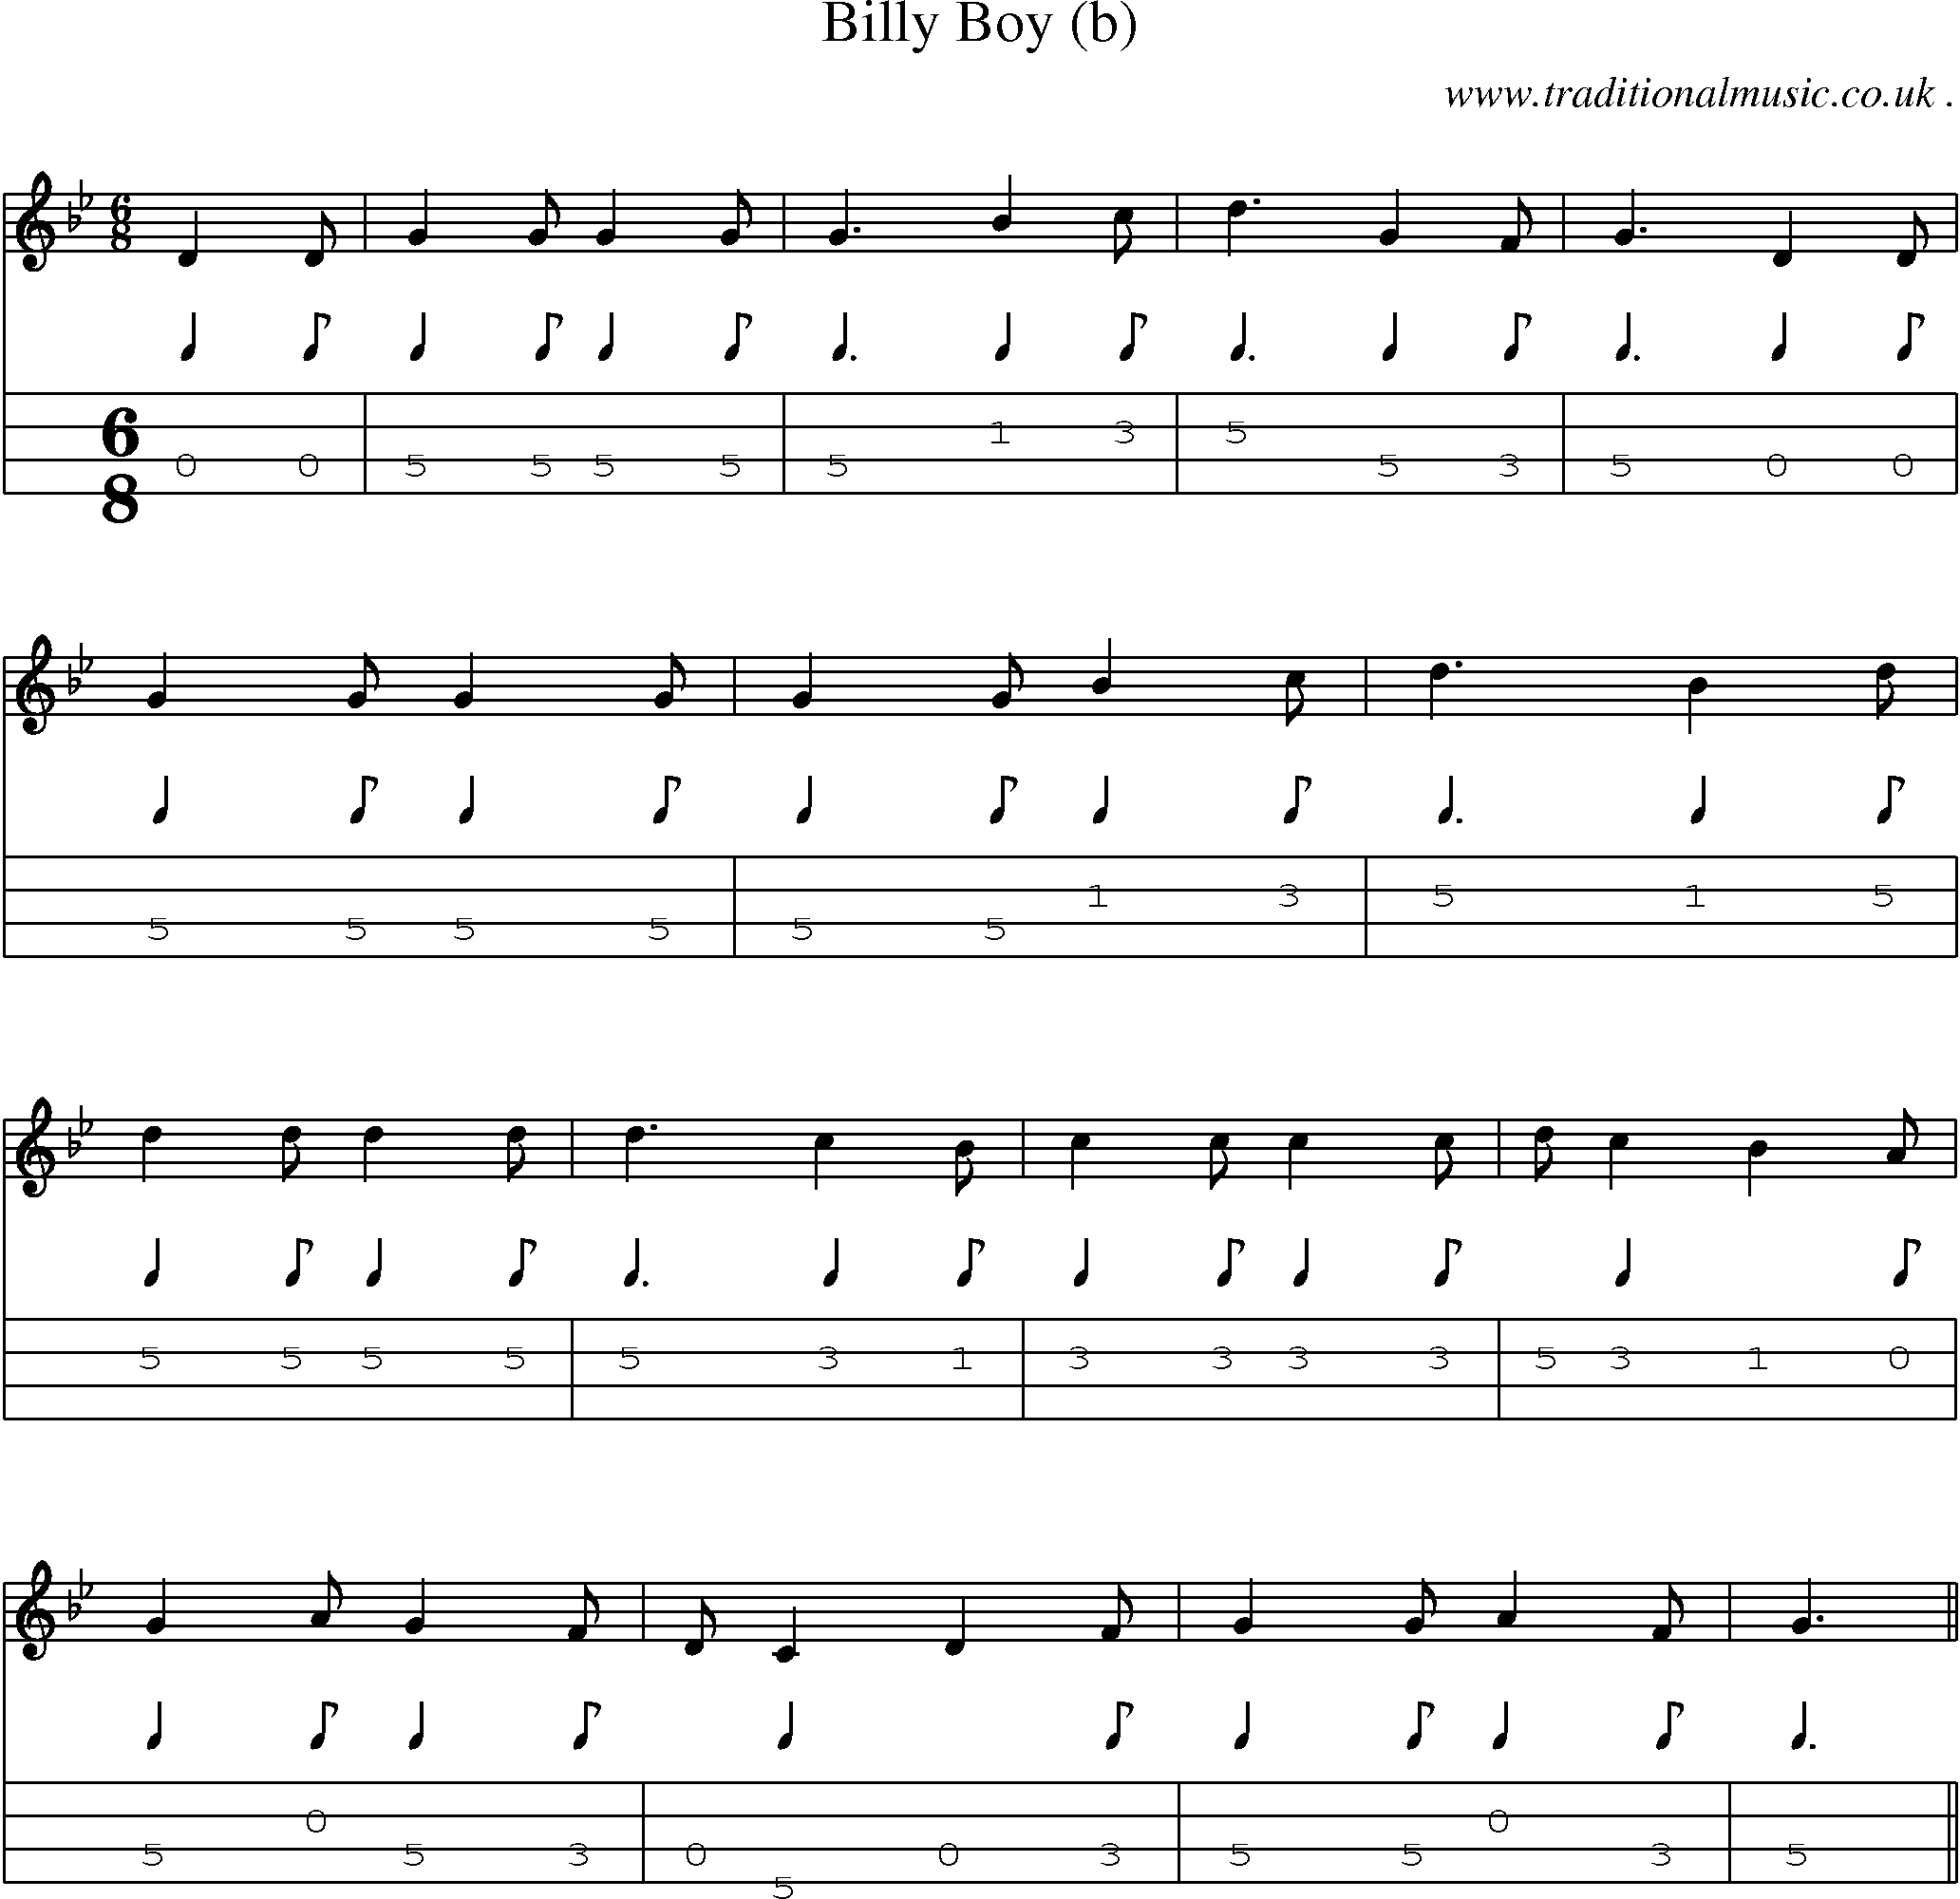 Sheet-Music and Mandolin Tabs for Billy Boy (b)